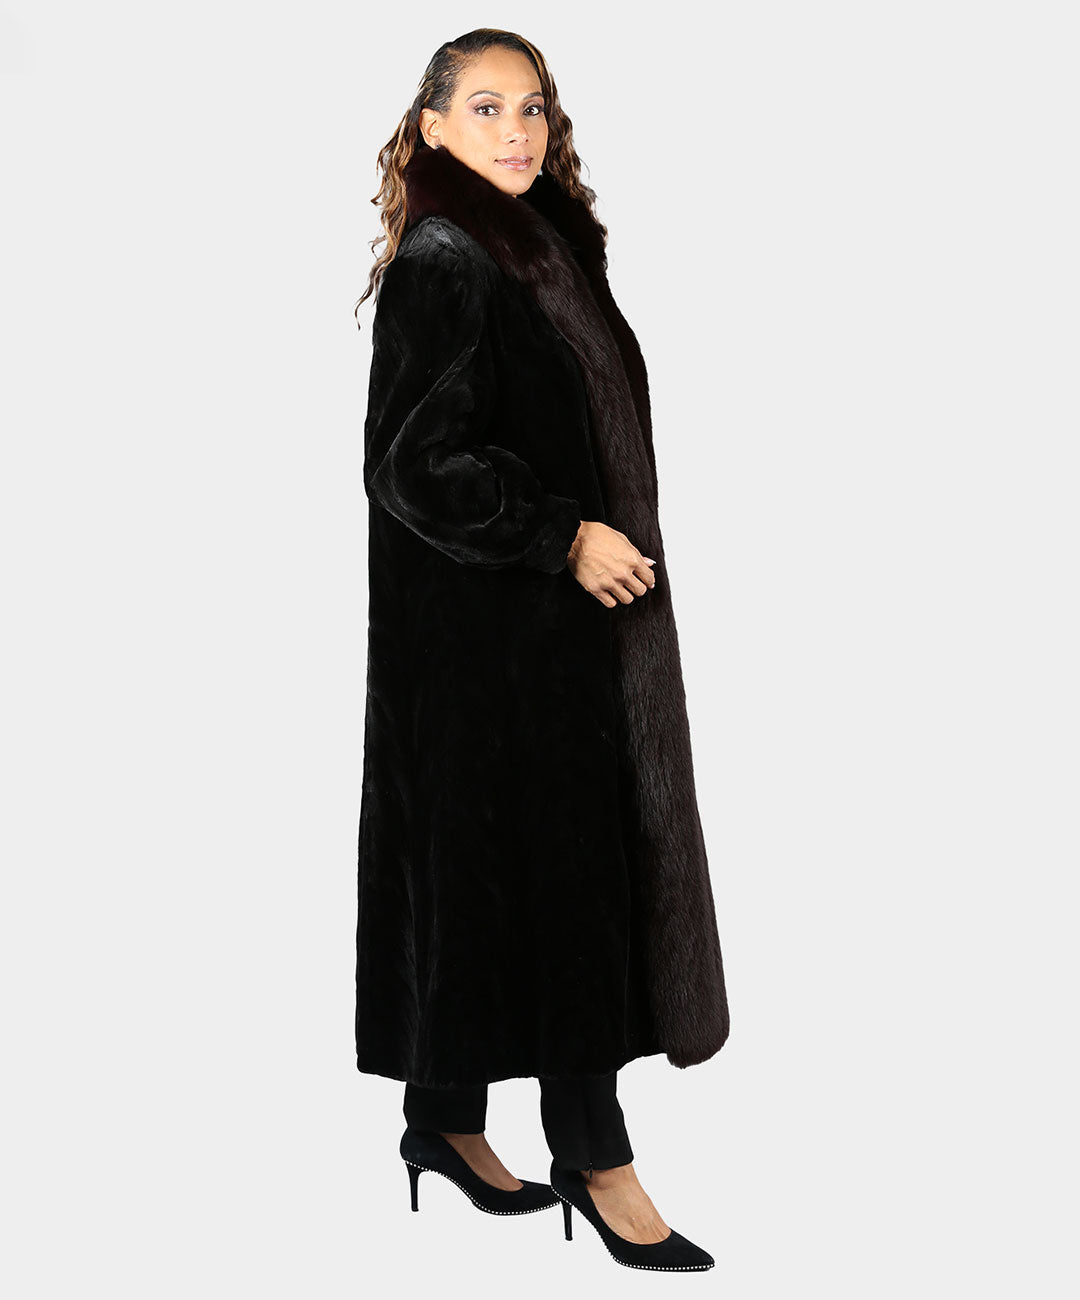 Women's Black Sheared and Sculptured Mink Fur Coat